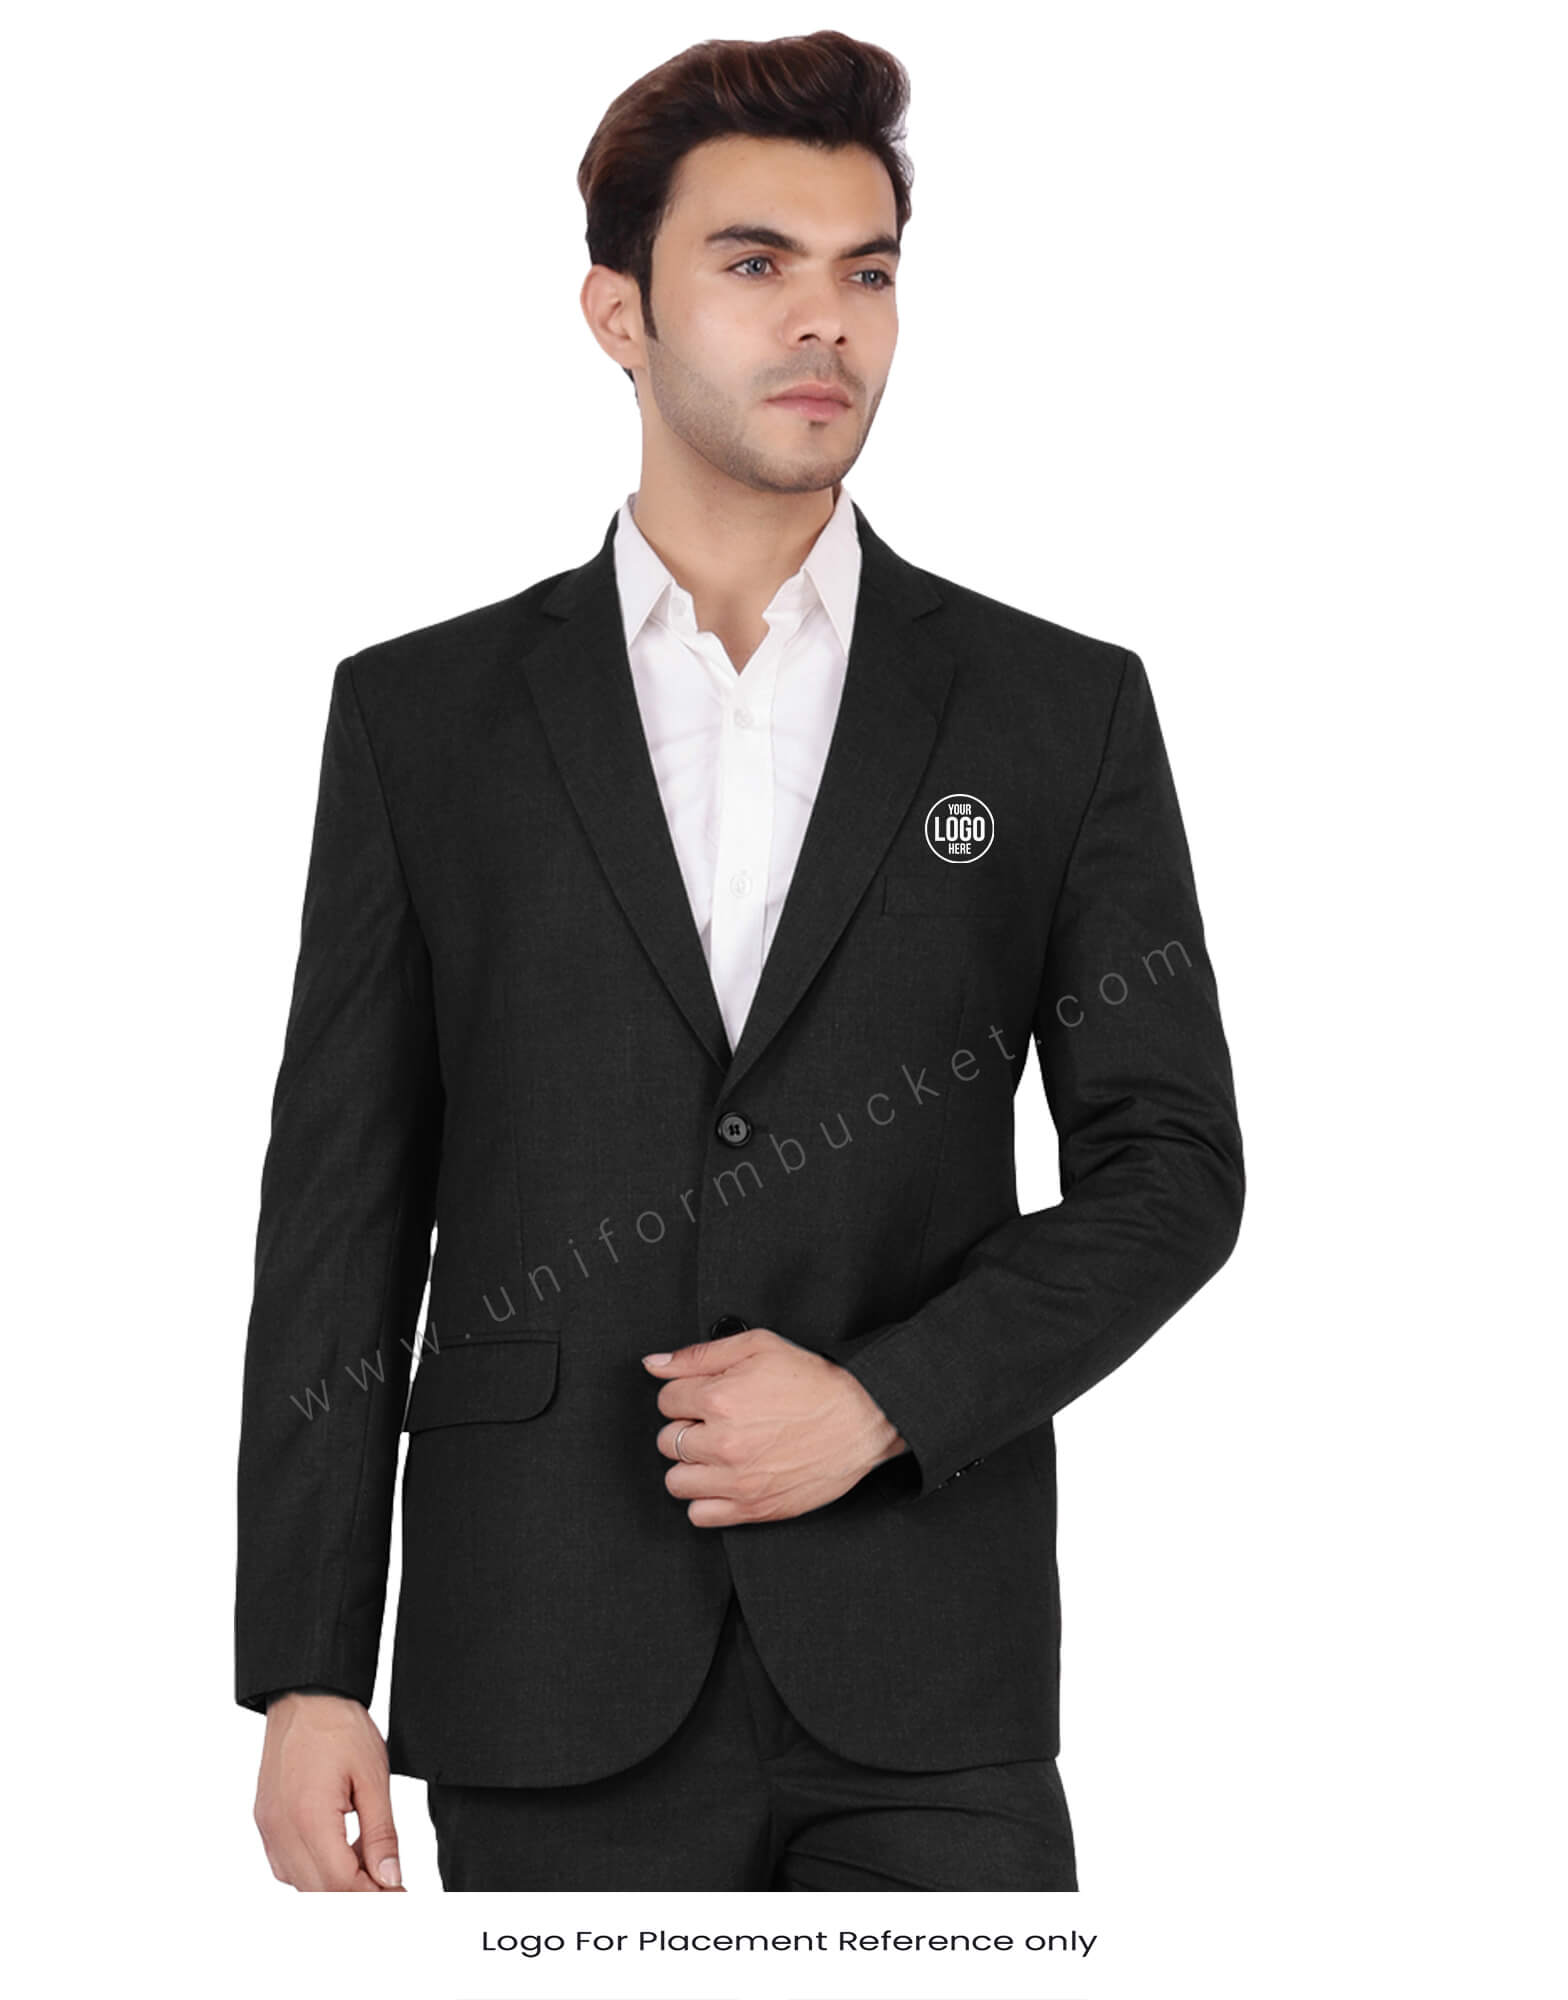 https://www.uniformbucket.com/img/product/original/black-formal-blazer-for-men.jpg